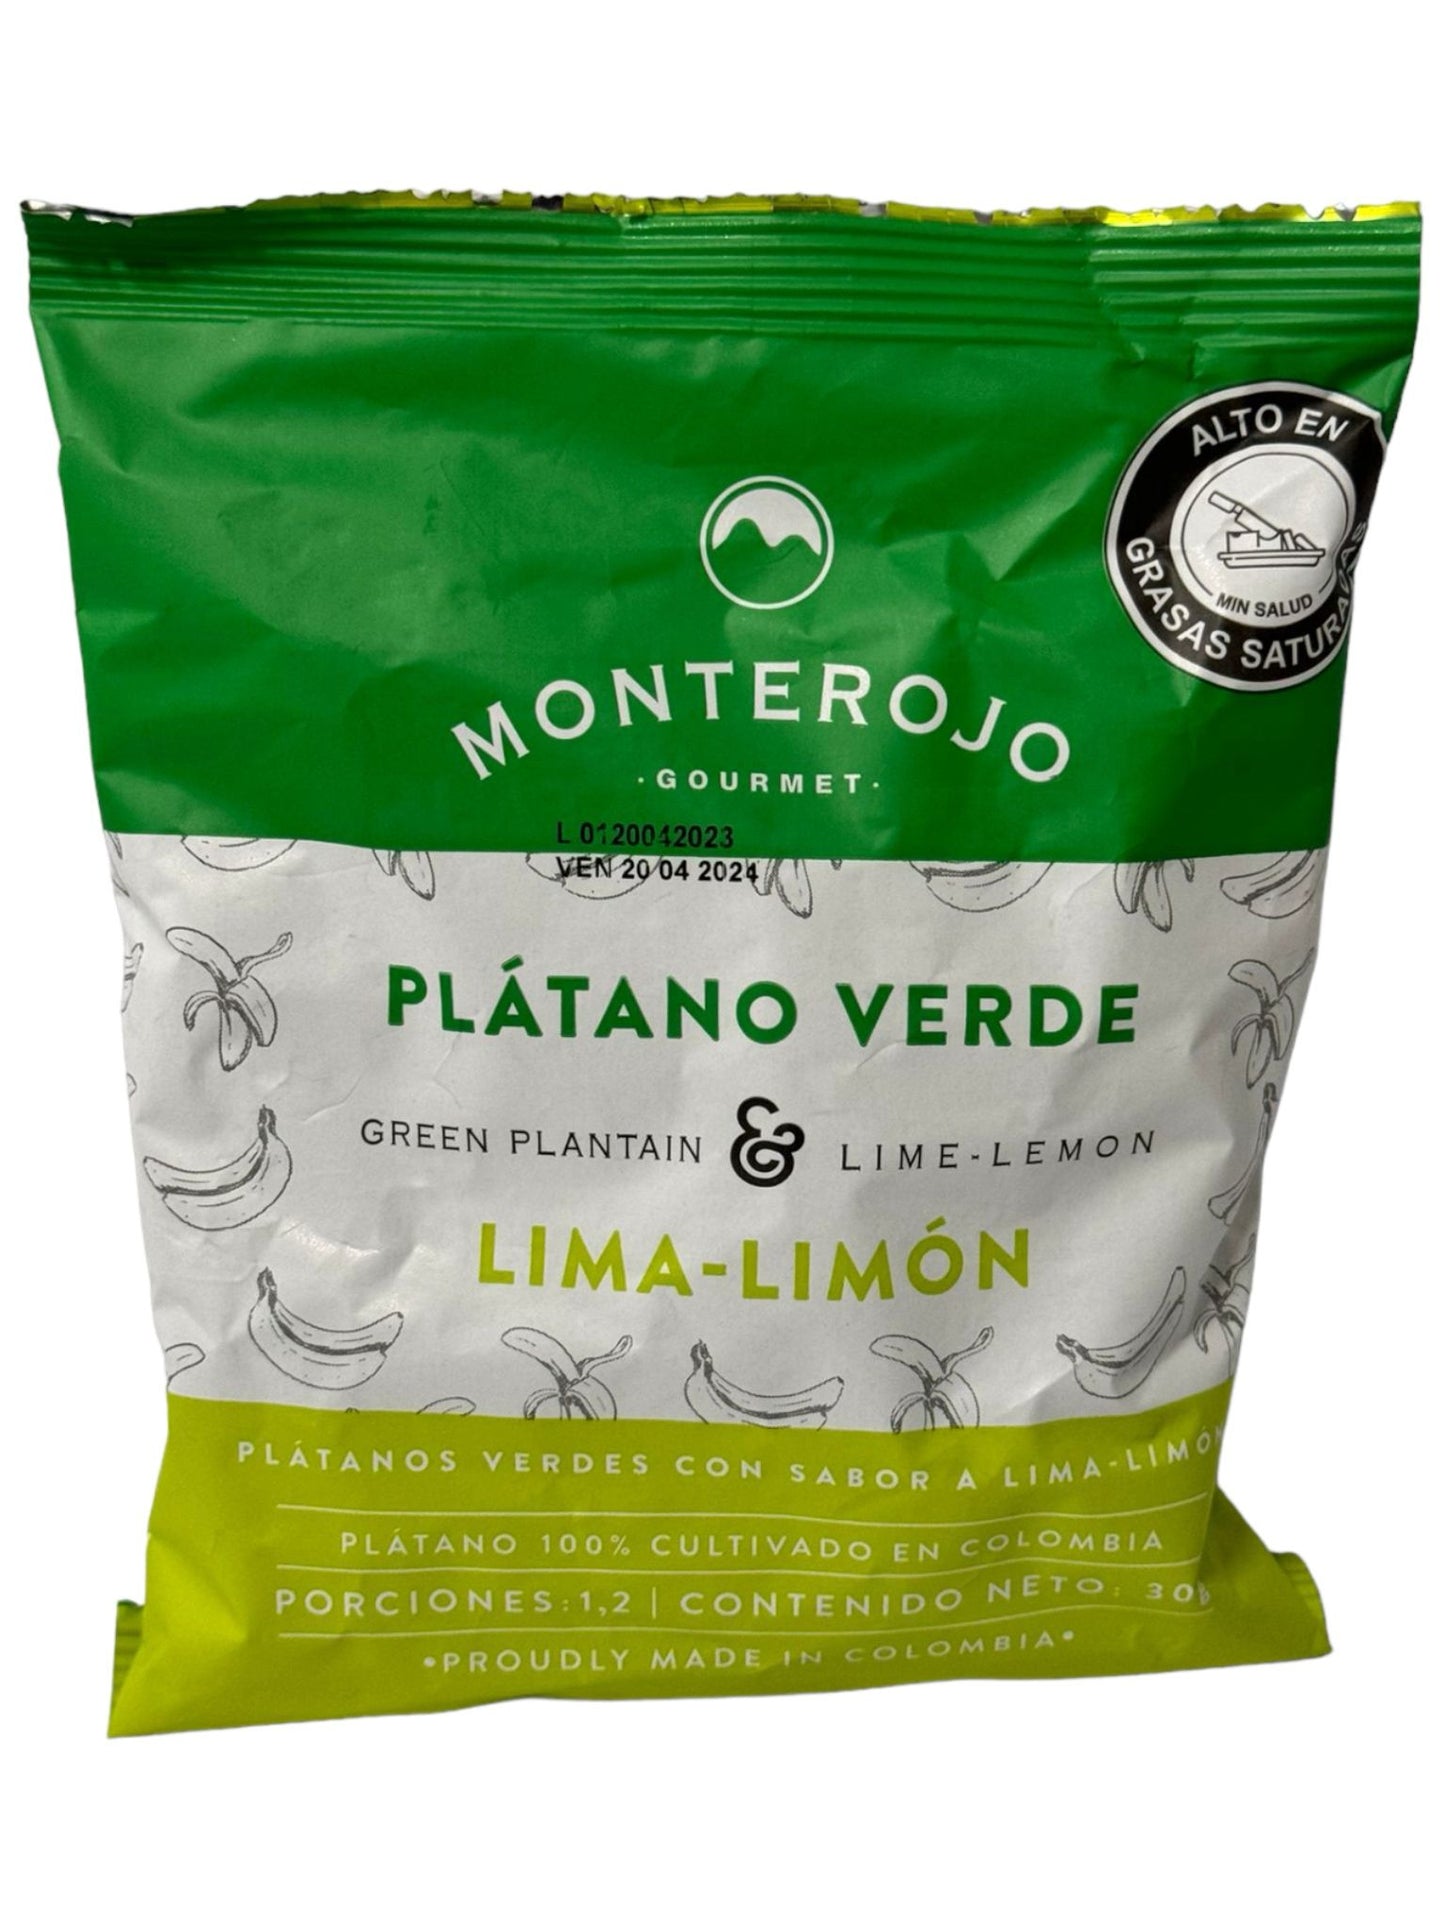 Monterojo Plantano Verde Lima-Limon Green Plantain Lime-Lemon 30g